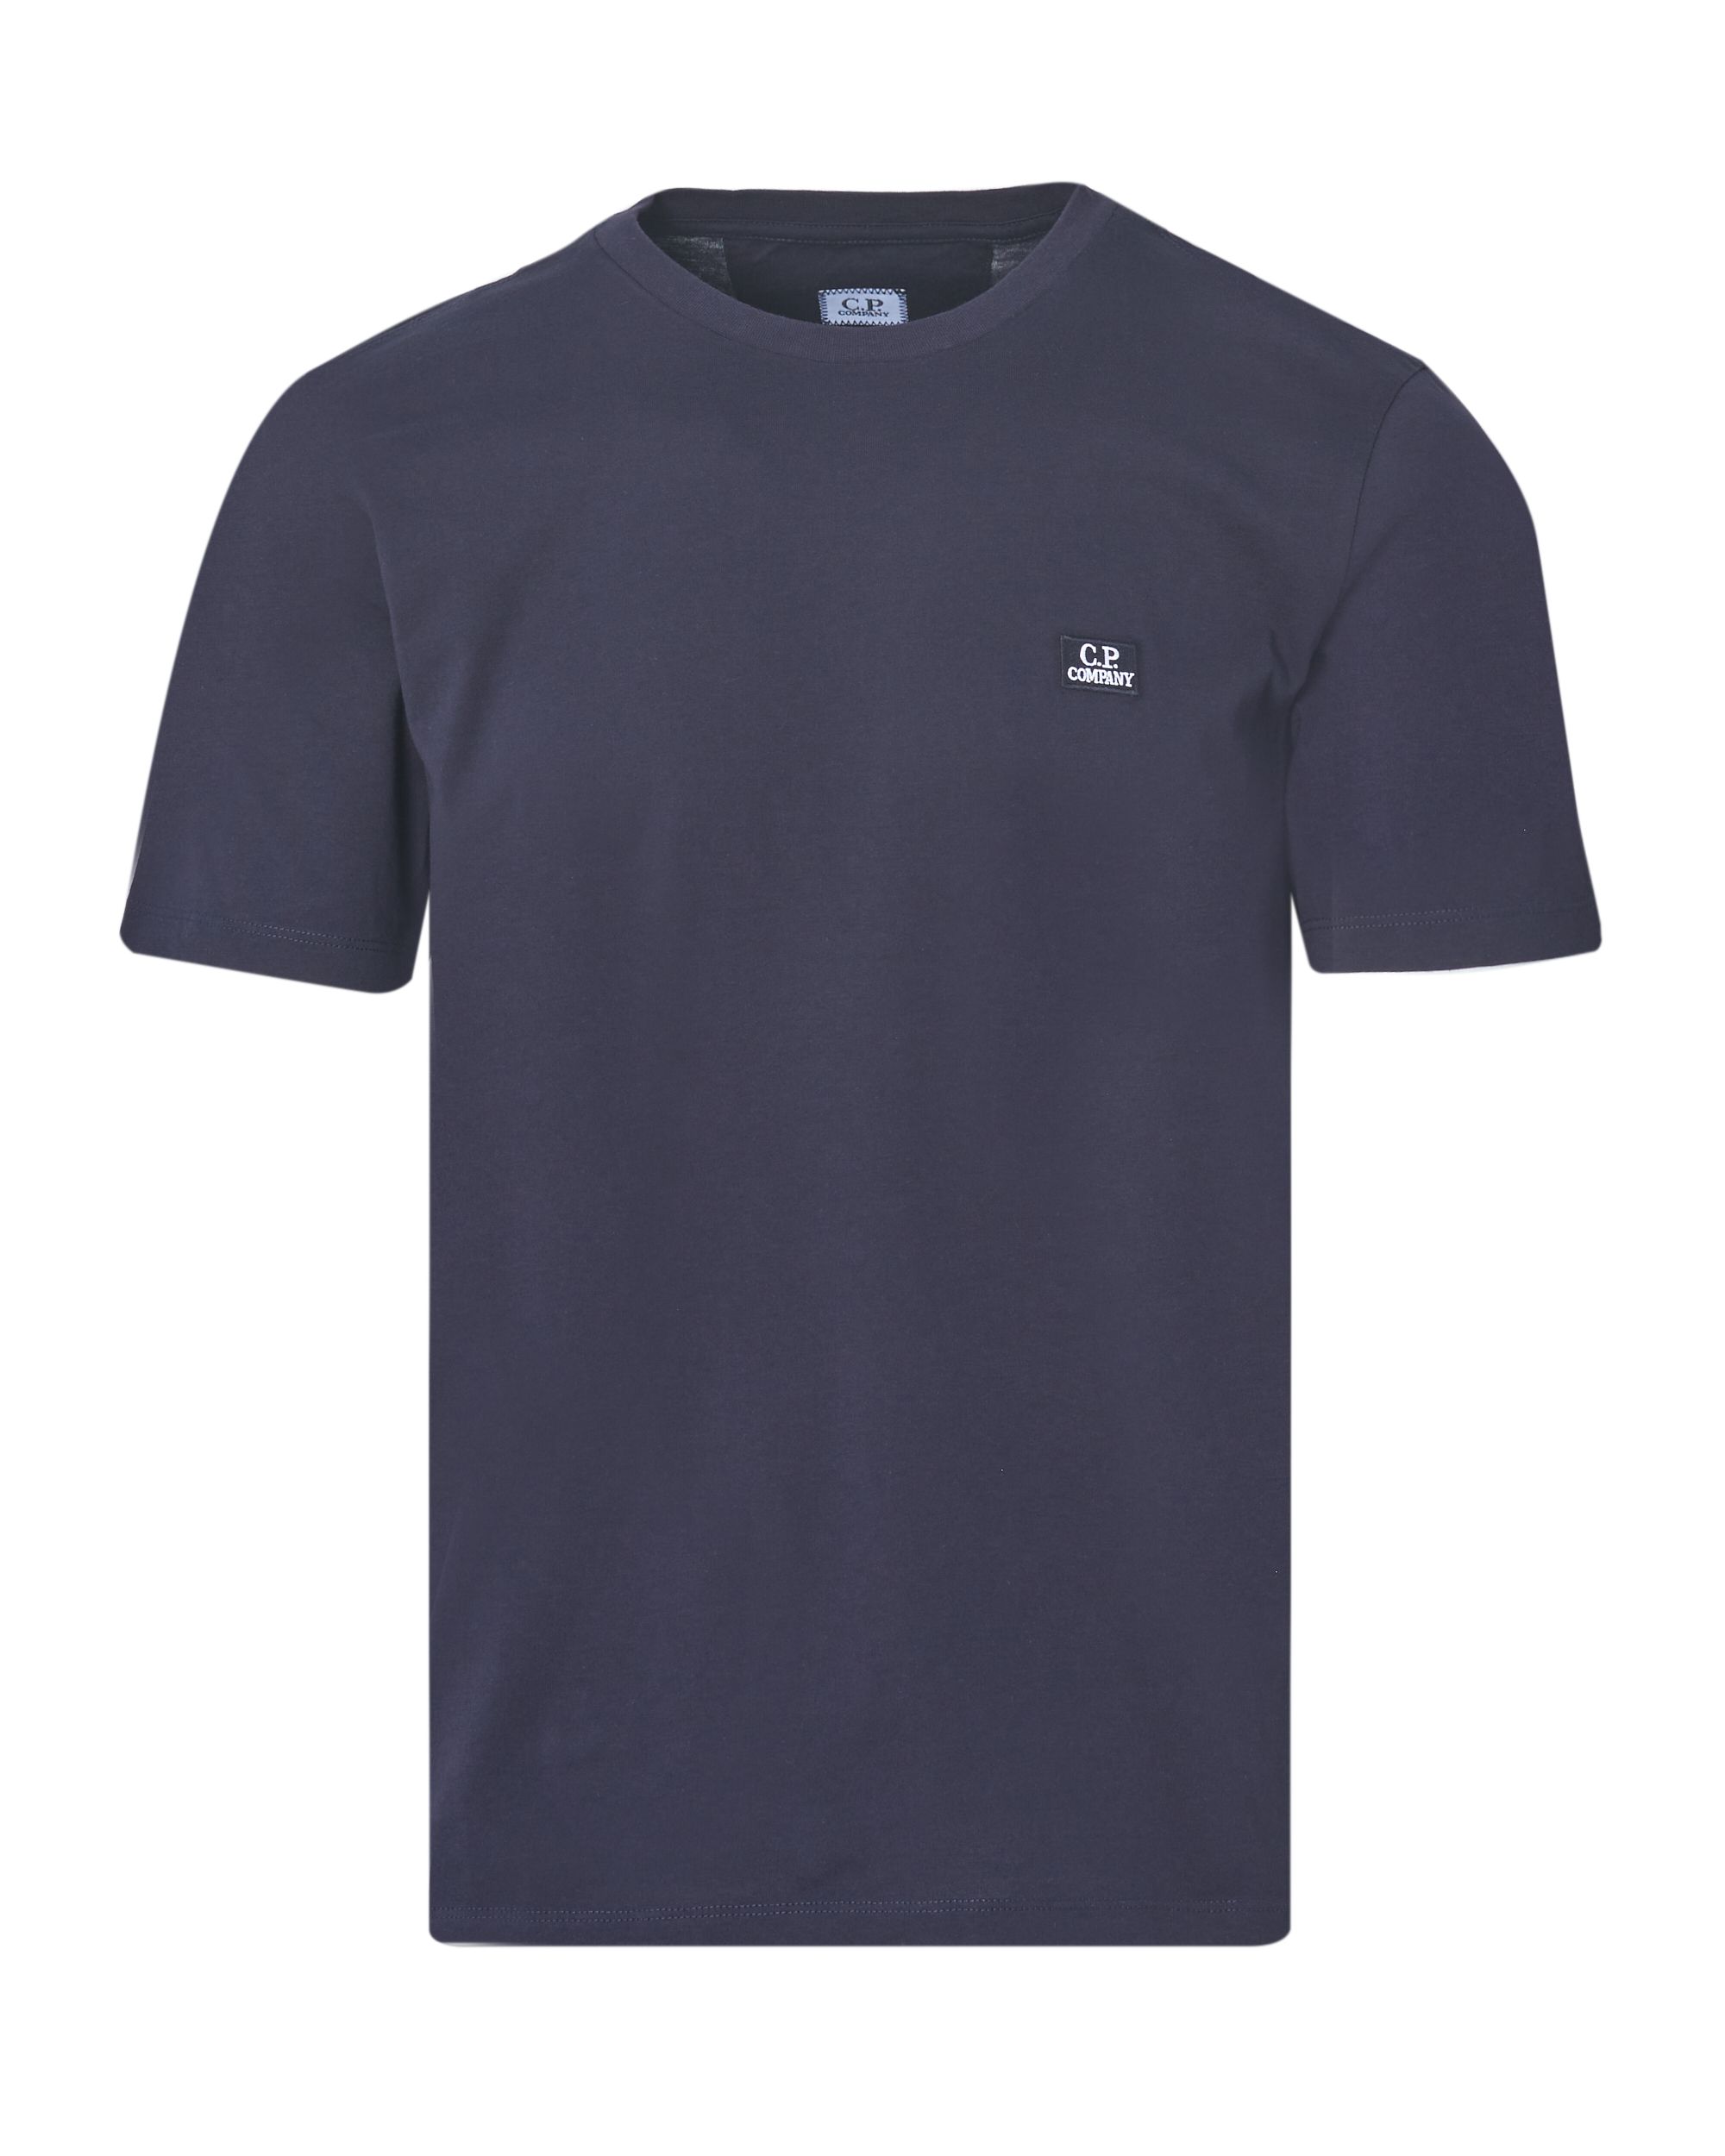 C.P Company T-shirt KM Donker blauw 082481-001-L